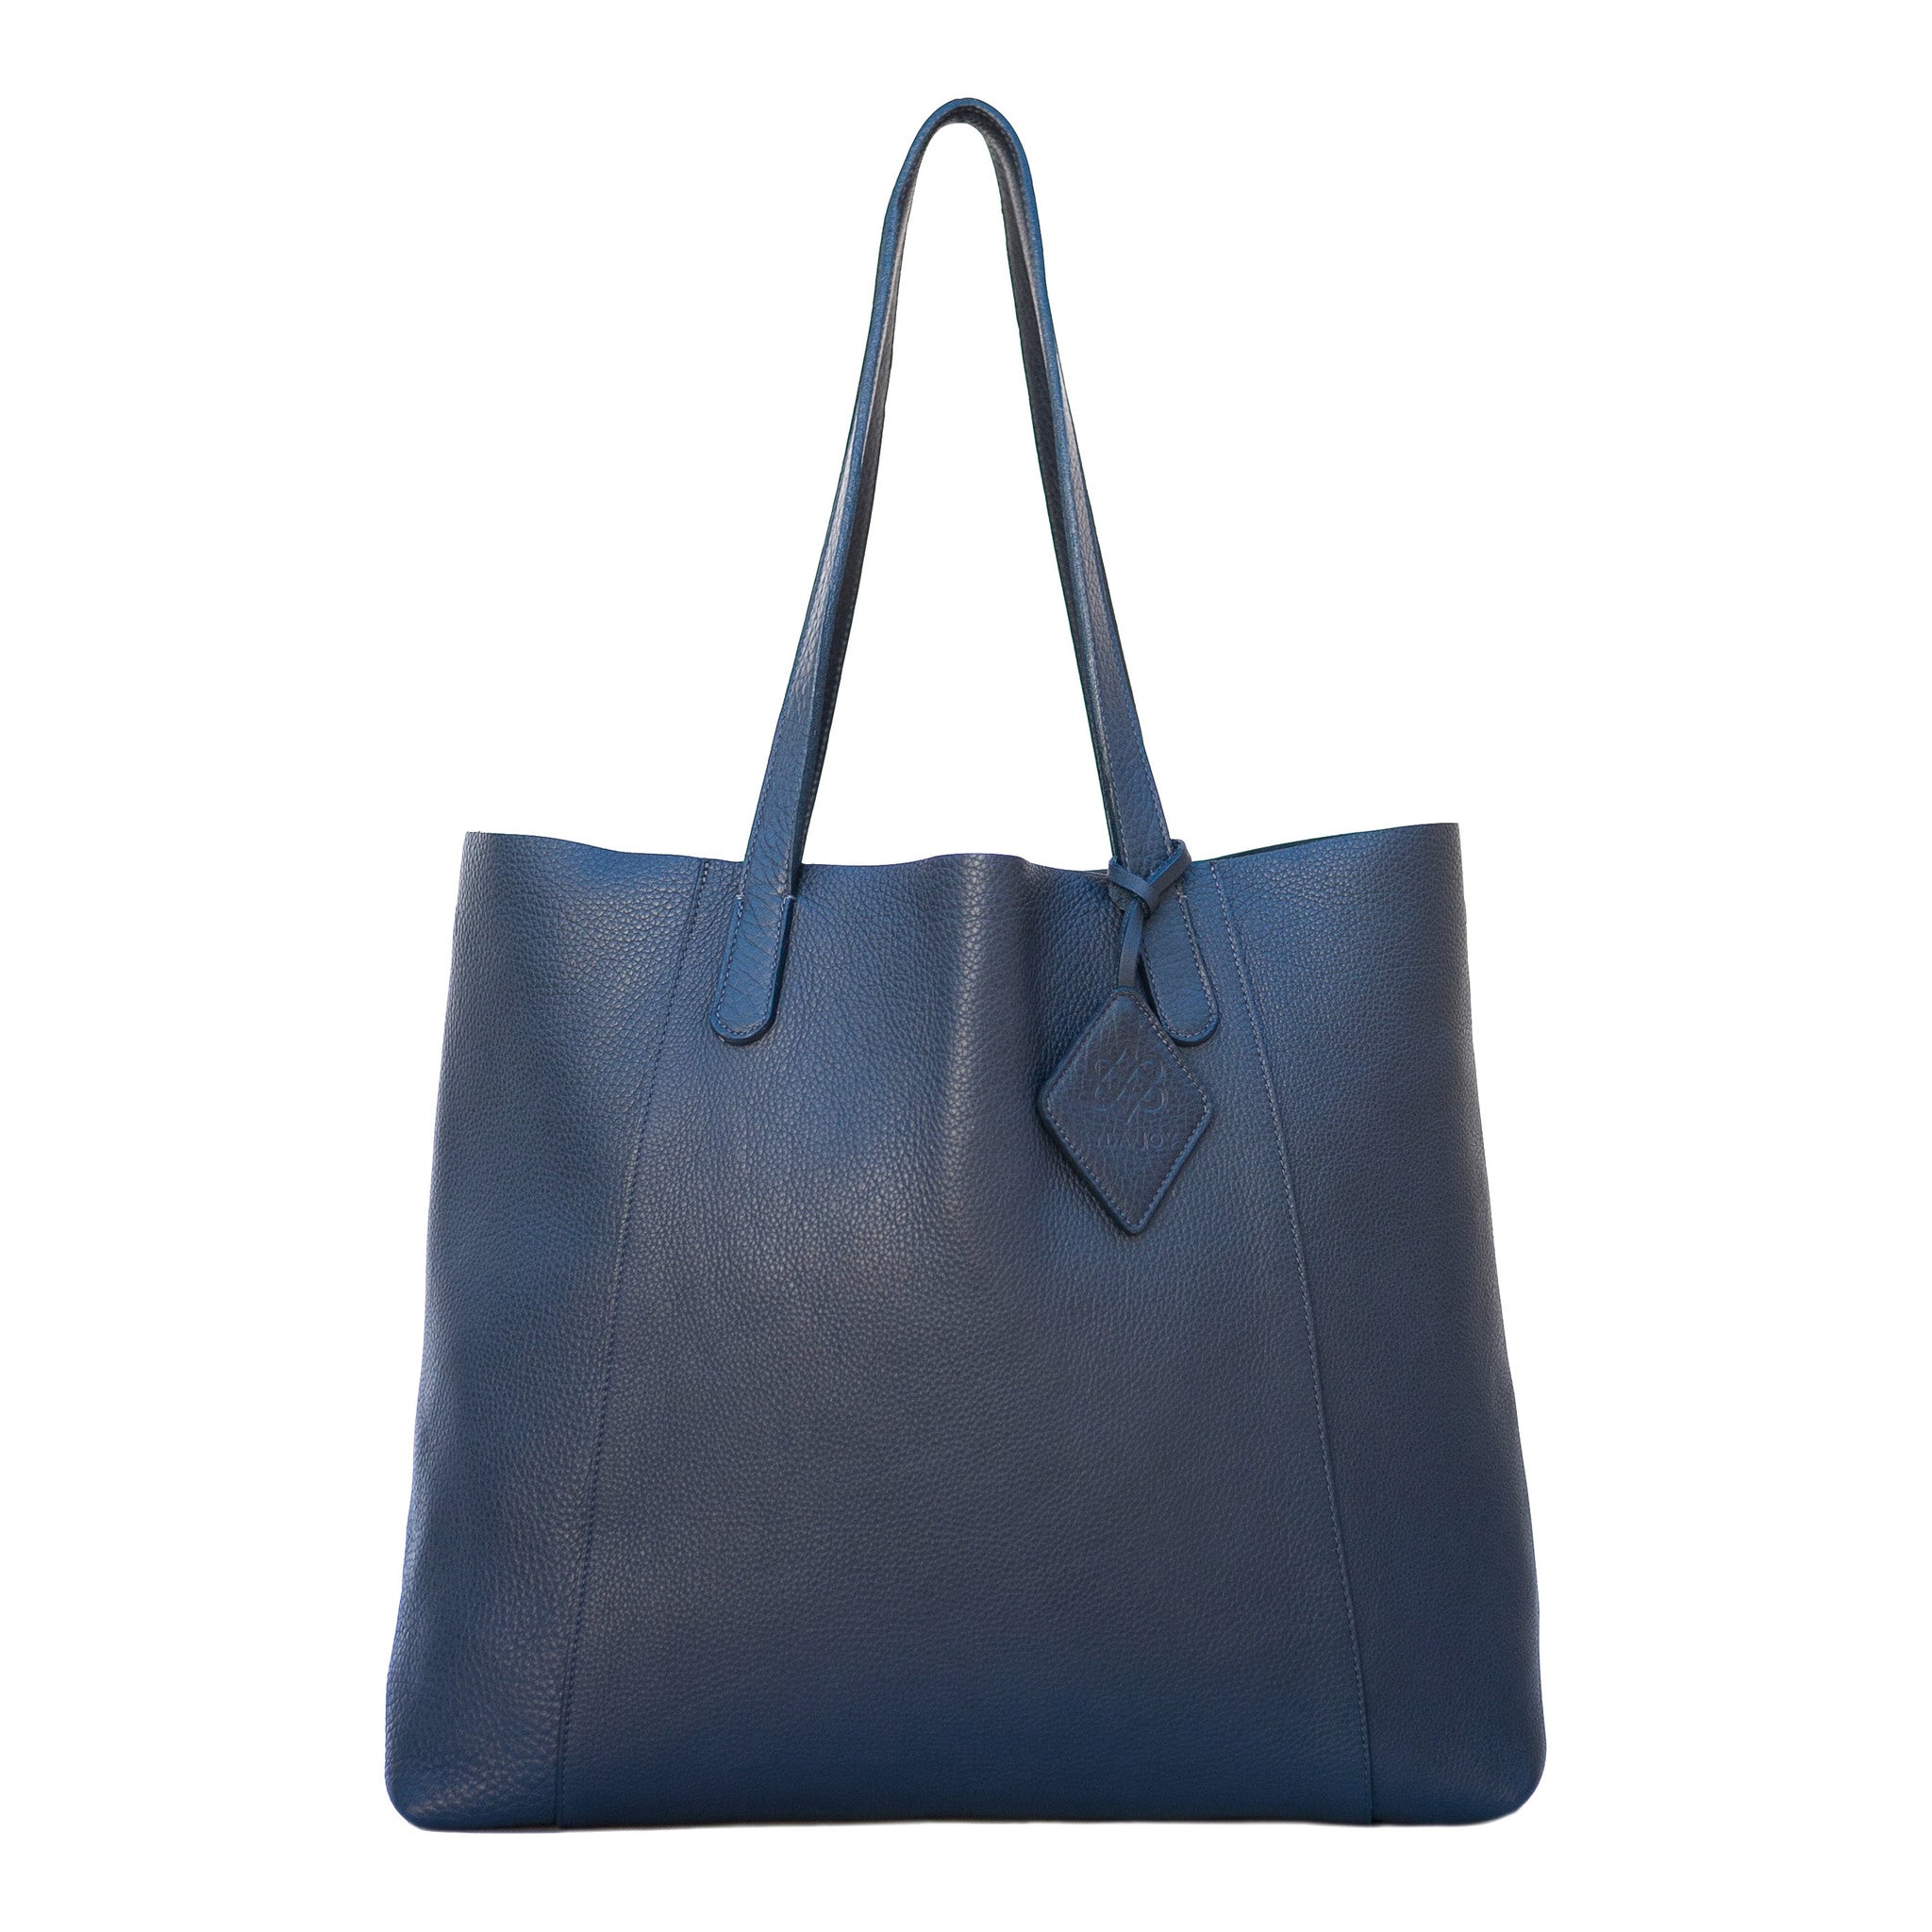 Shop All | Luxury Leather Handbags | KYLA JOY